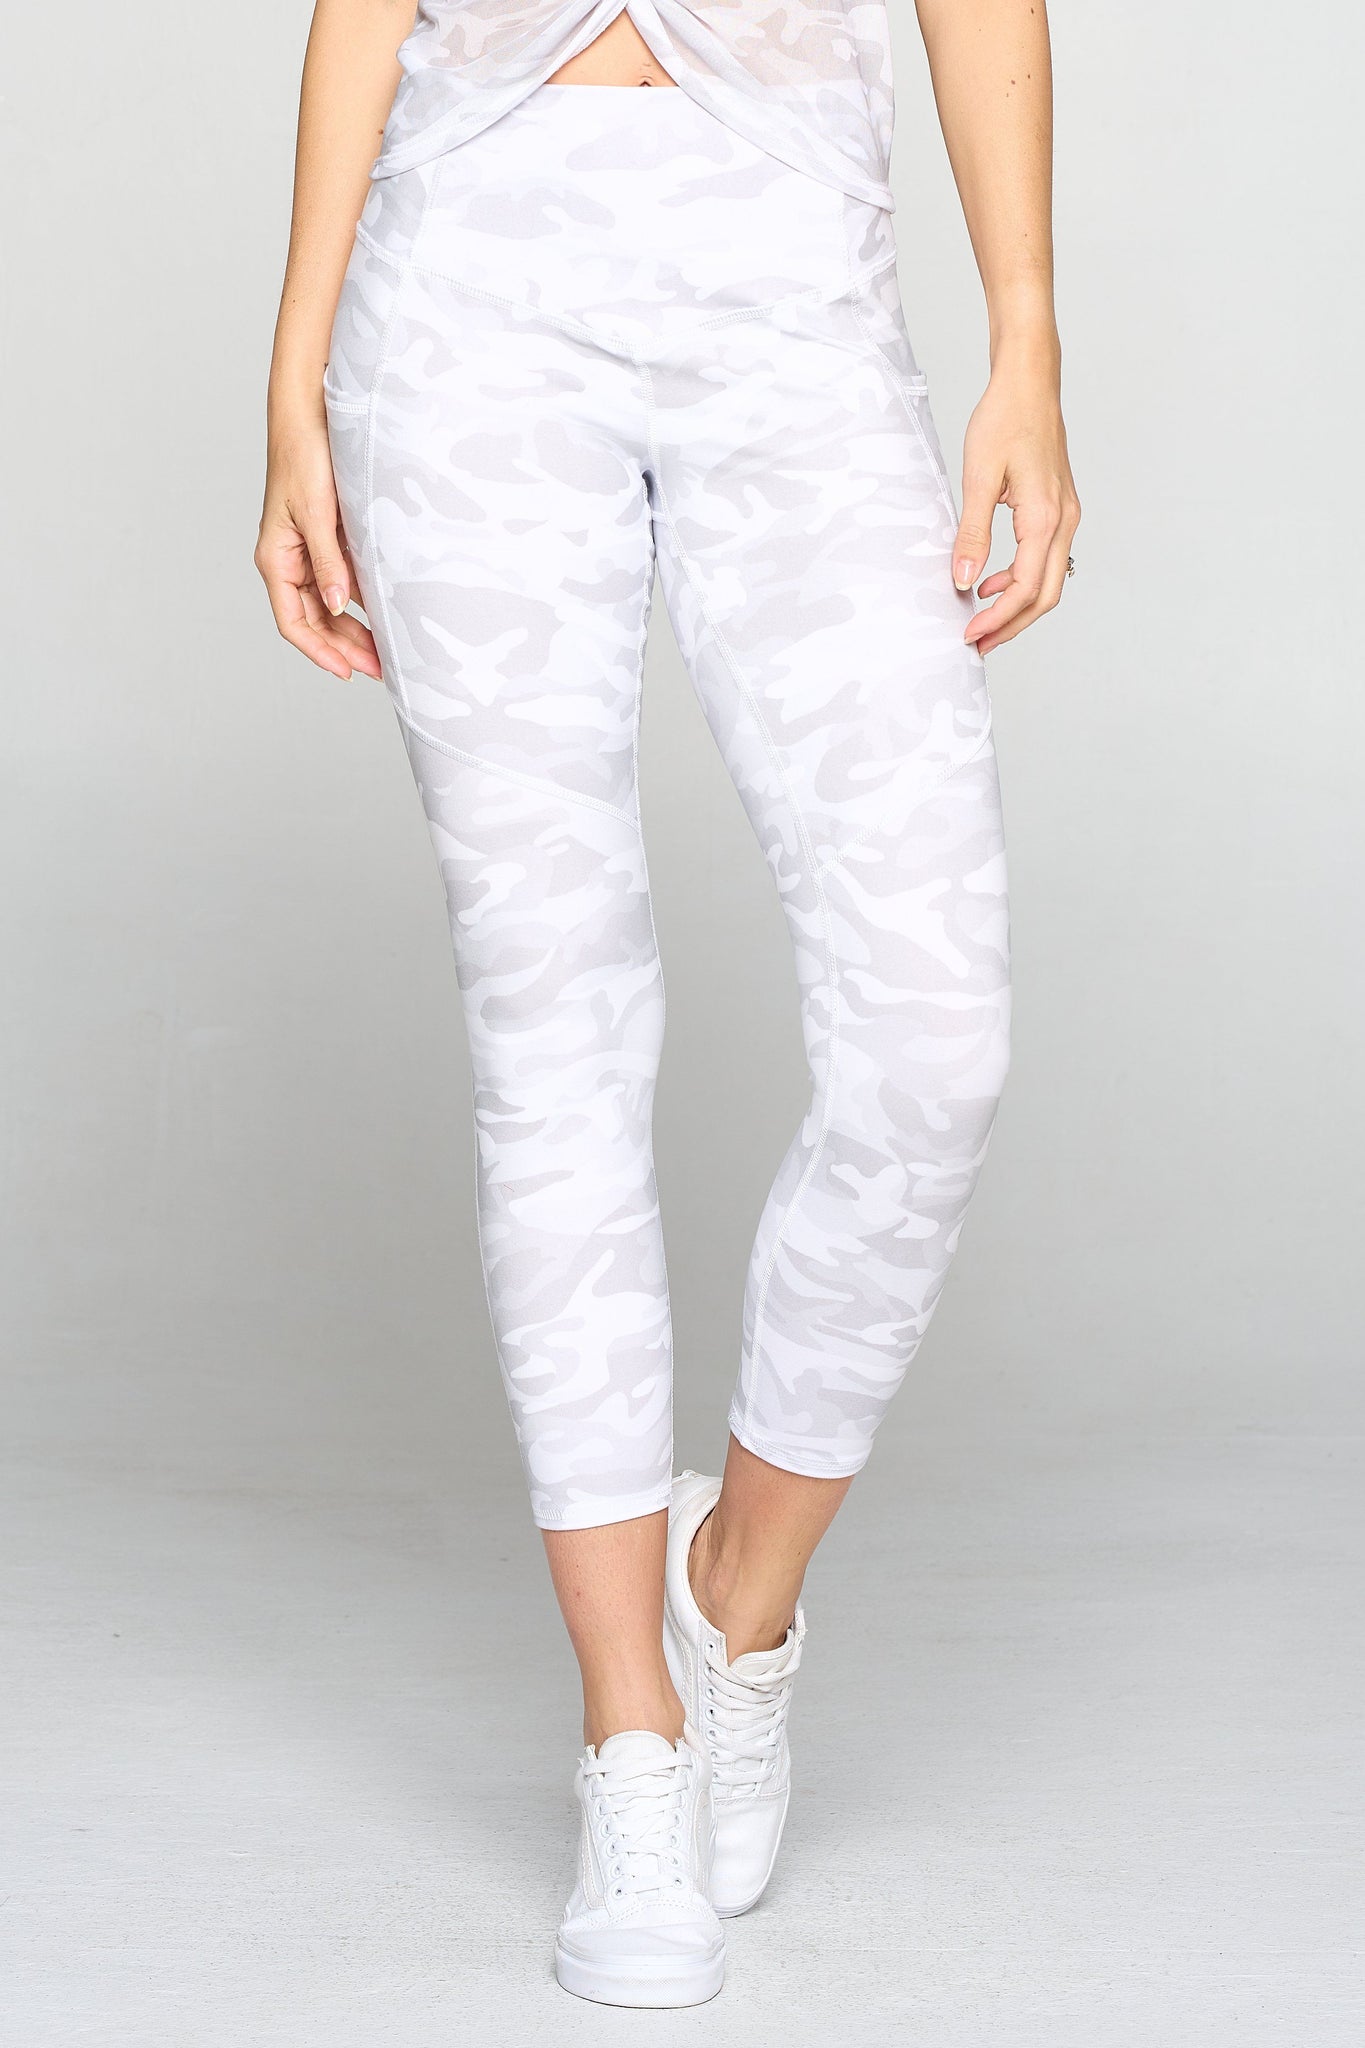 Liz - Grey White Camo w Pockets 7/8 Legging - FINAL SALE – EVCR